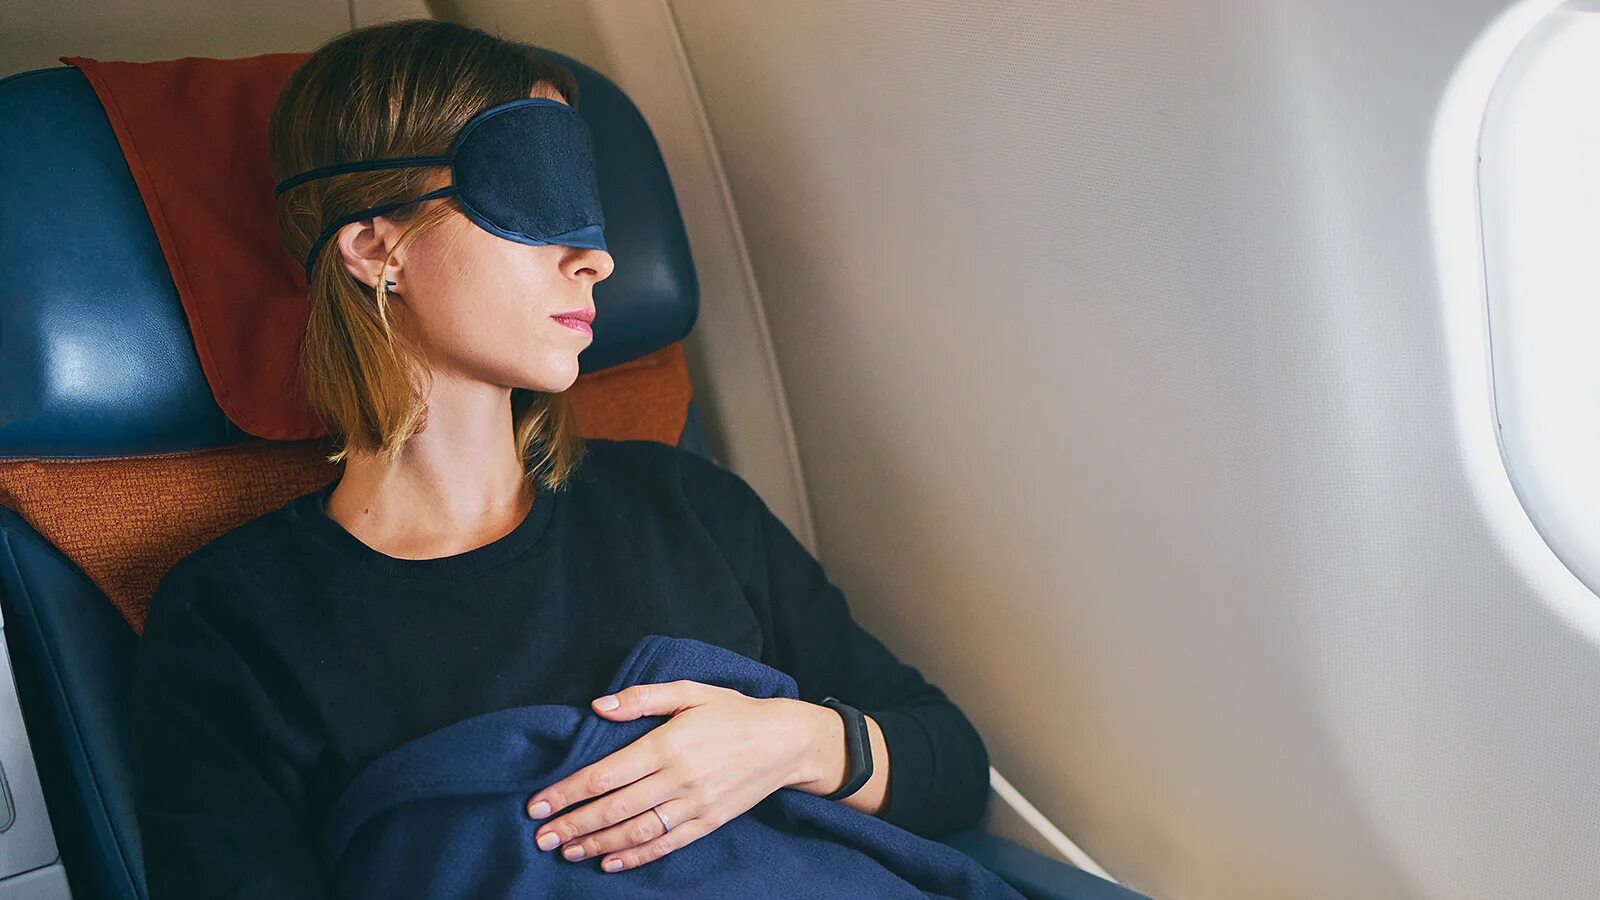 Девушка в самолете. Маска для сна в самолете. Сон в самолете. Спать в самолете.